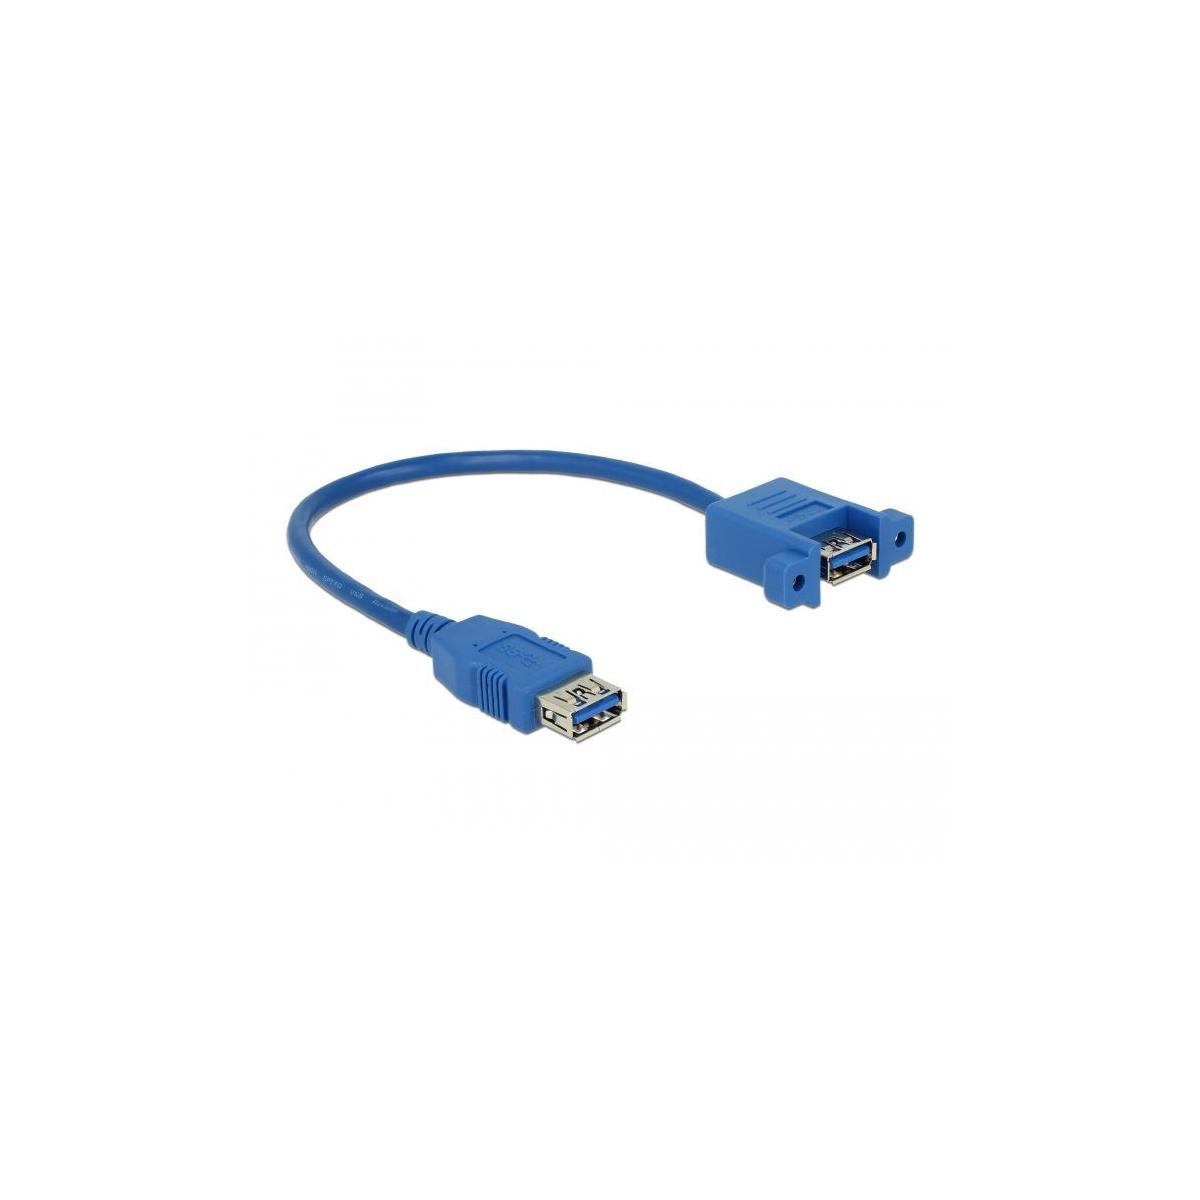 DELOCK 85111 USB Kabel, Blau